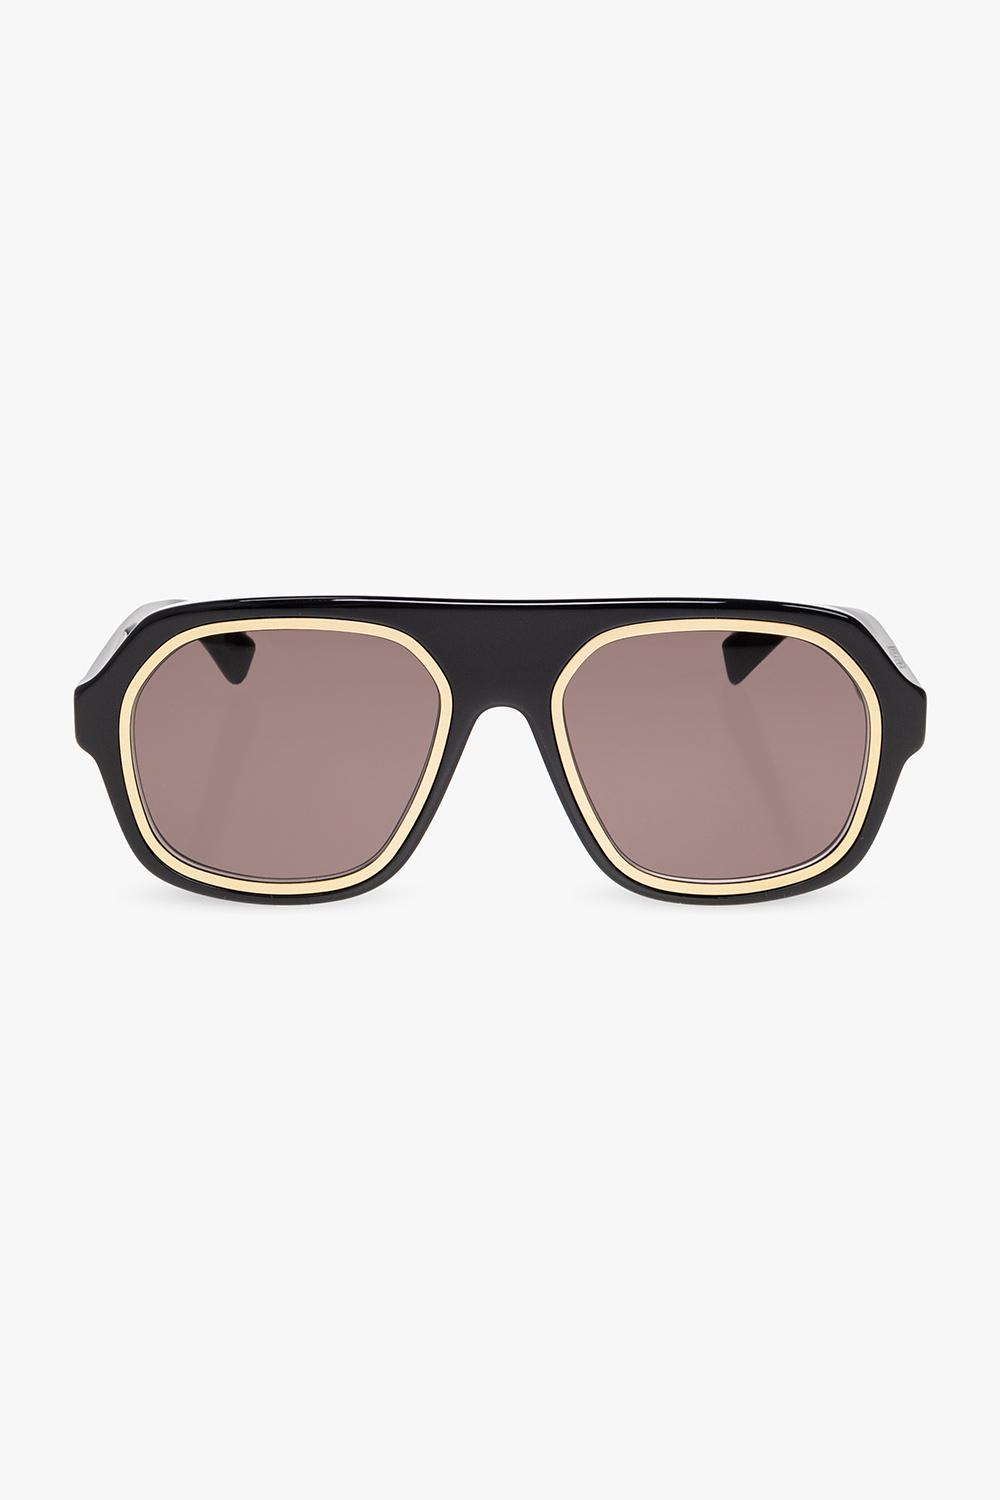 Bottega Veneta Eyewear Rim Aviator Sunglasses